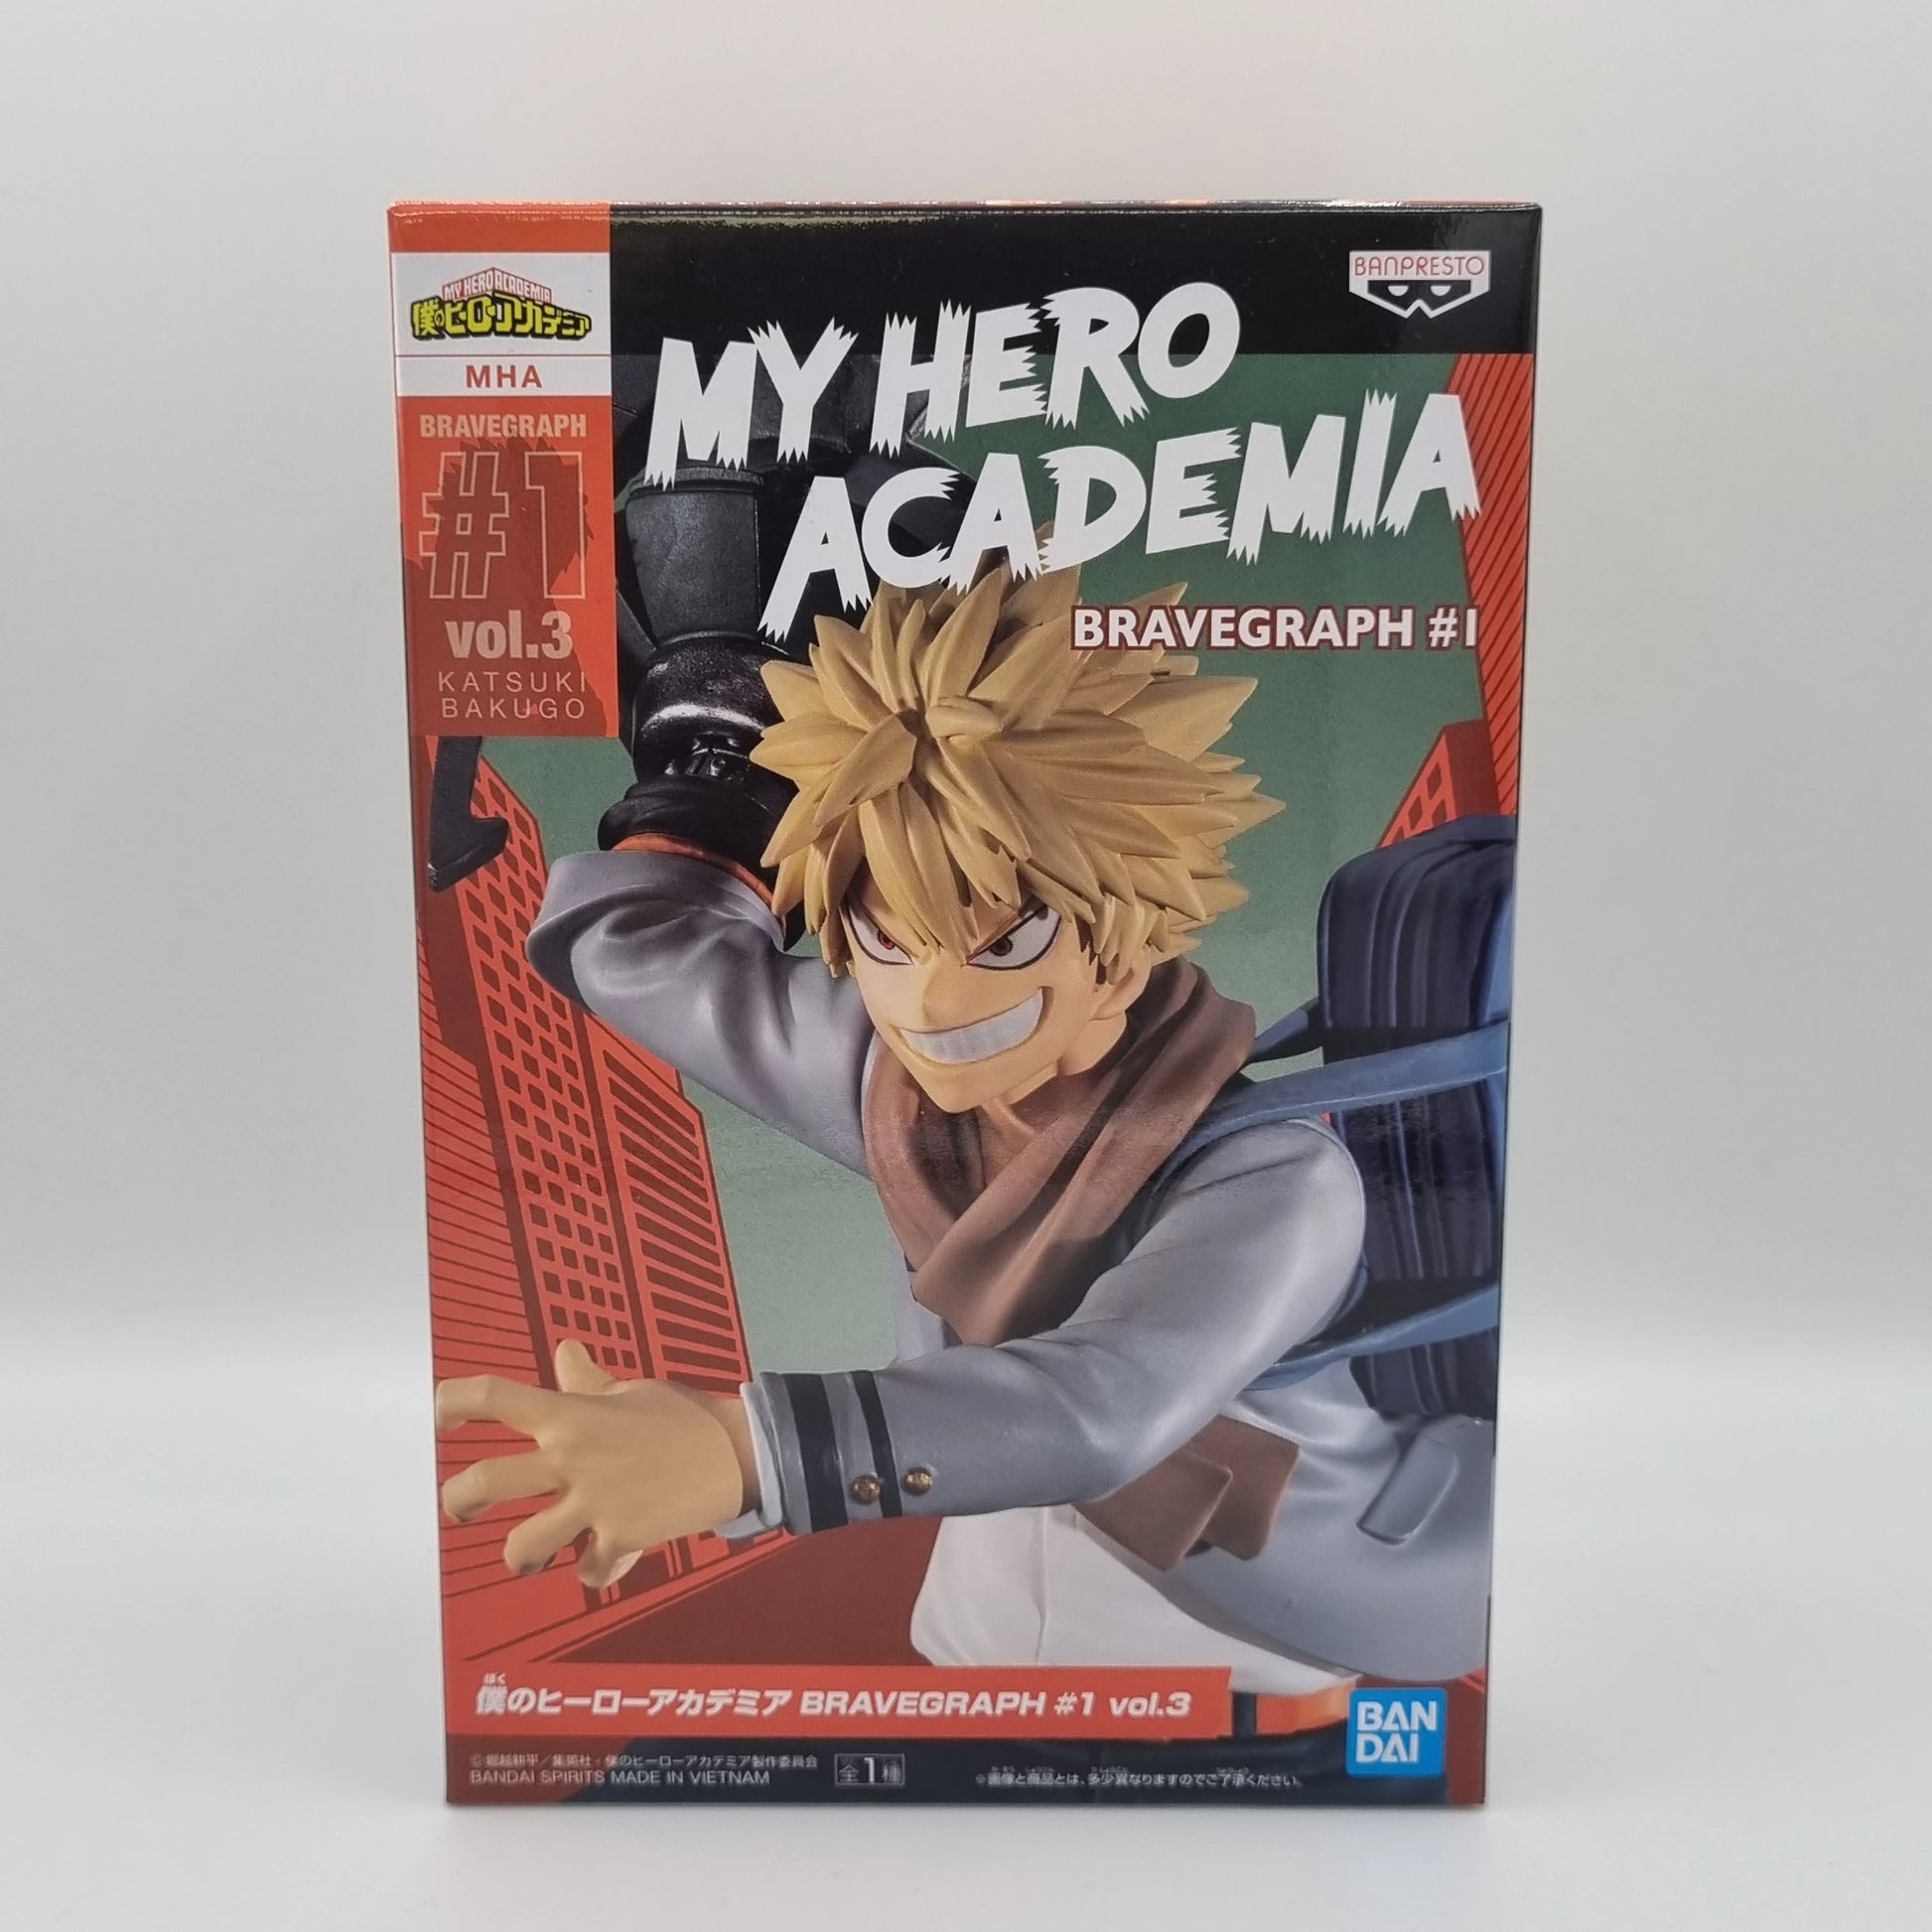 Anime Shop, My Hero Academia Katsuki Bakugo BRAVEGRAPH #1 Vol.3, Front View Packaging